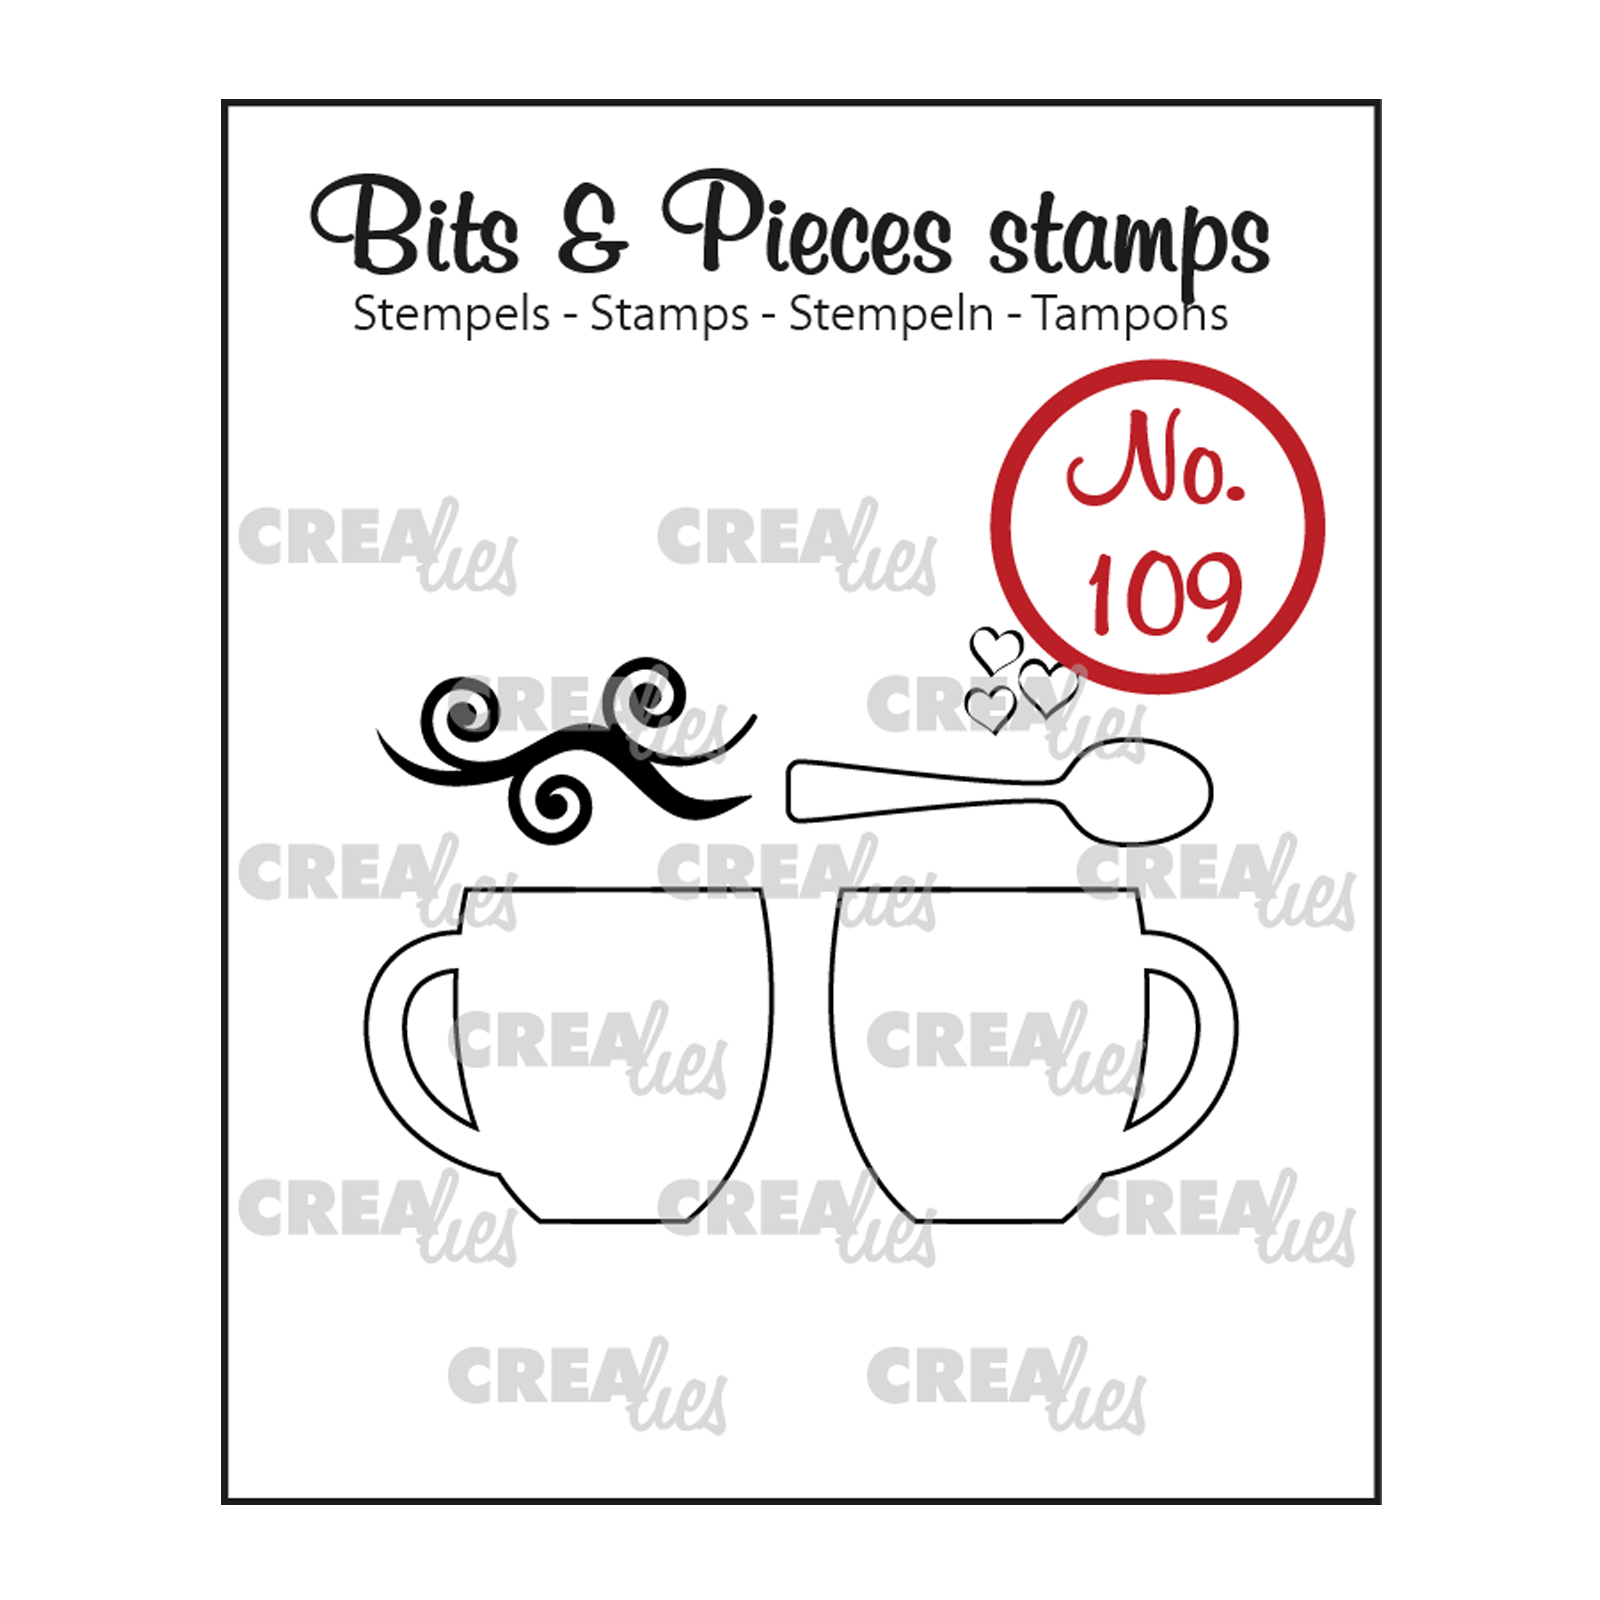 Crealies • Bits & Pieces stamp No.109 2 Mugs + spoon